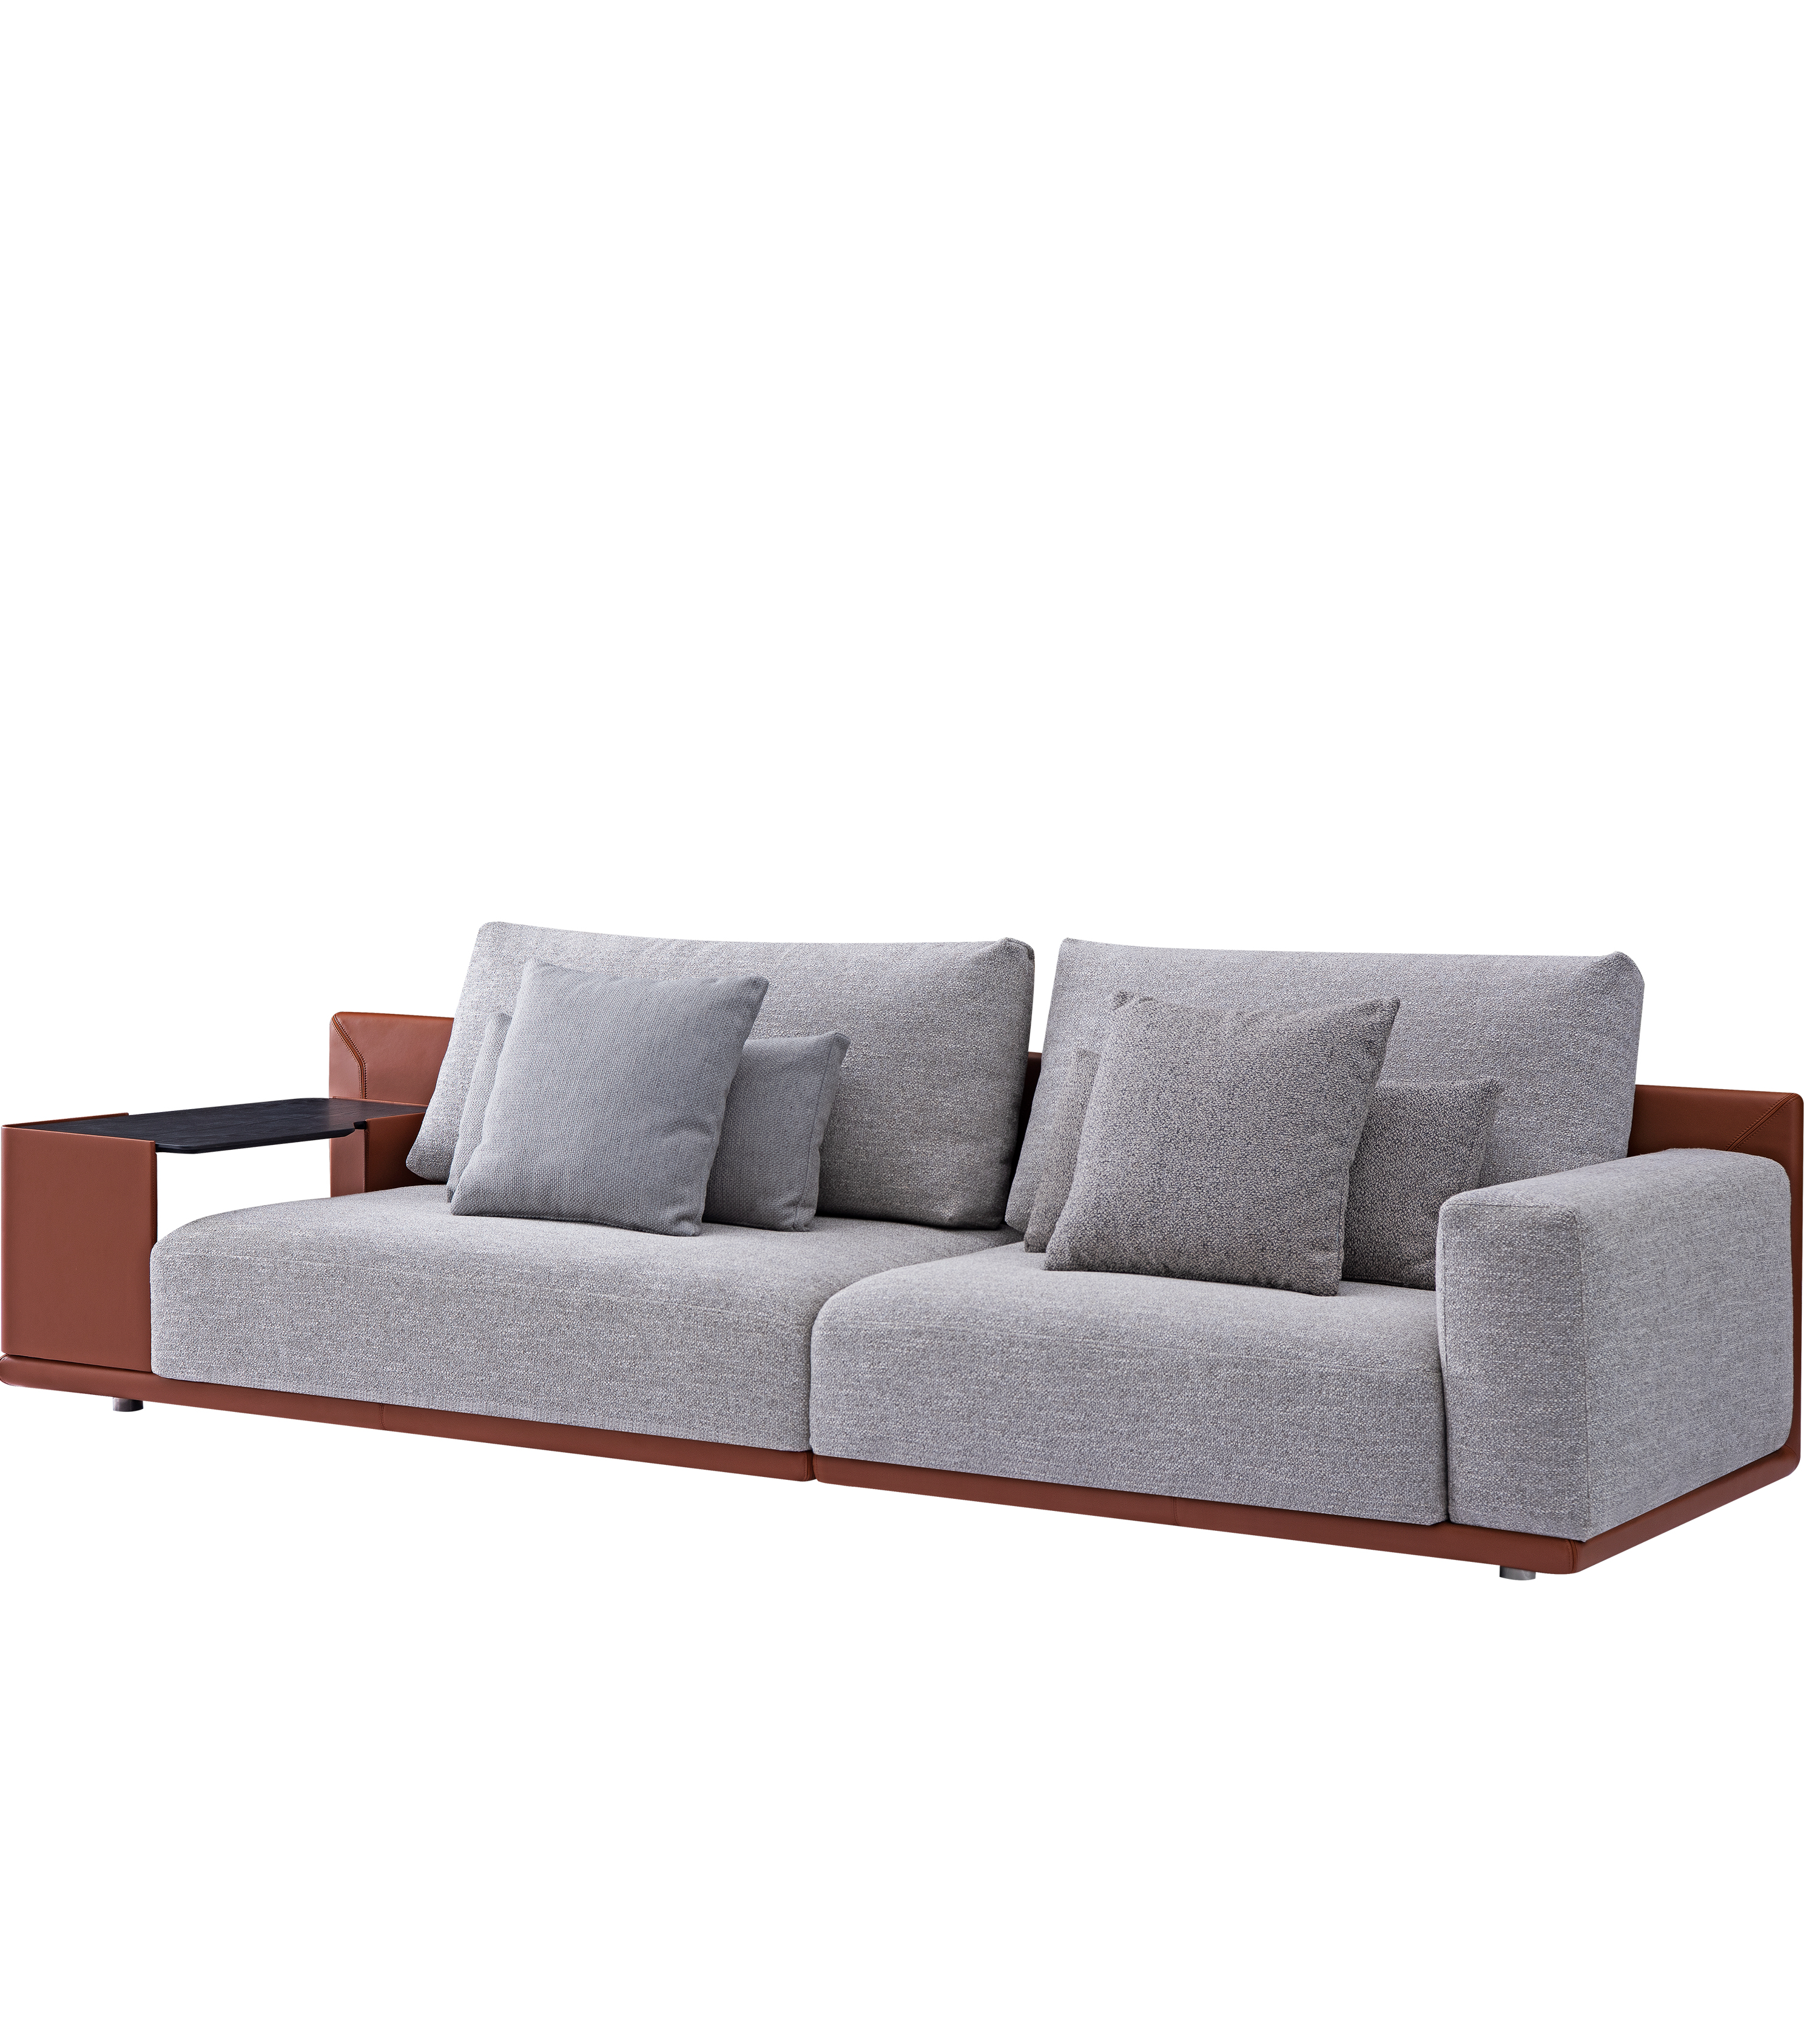 Modern Sofa Sets For Living Room | Top Quality Modern Sofa